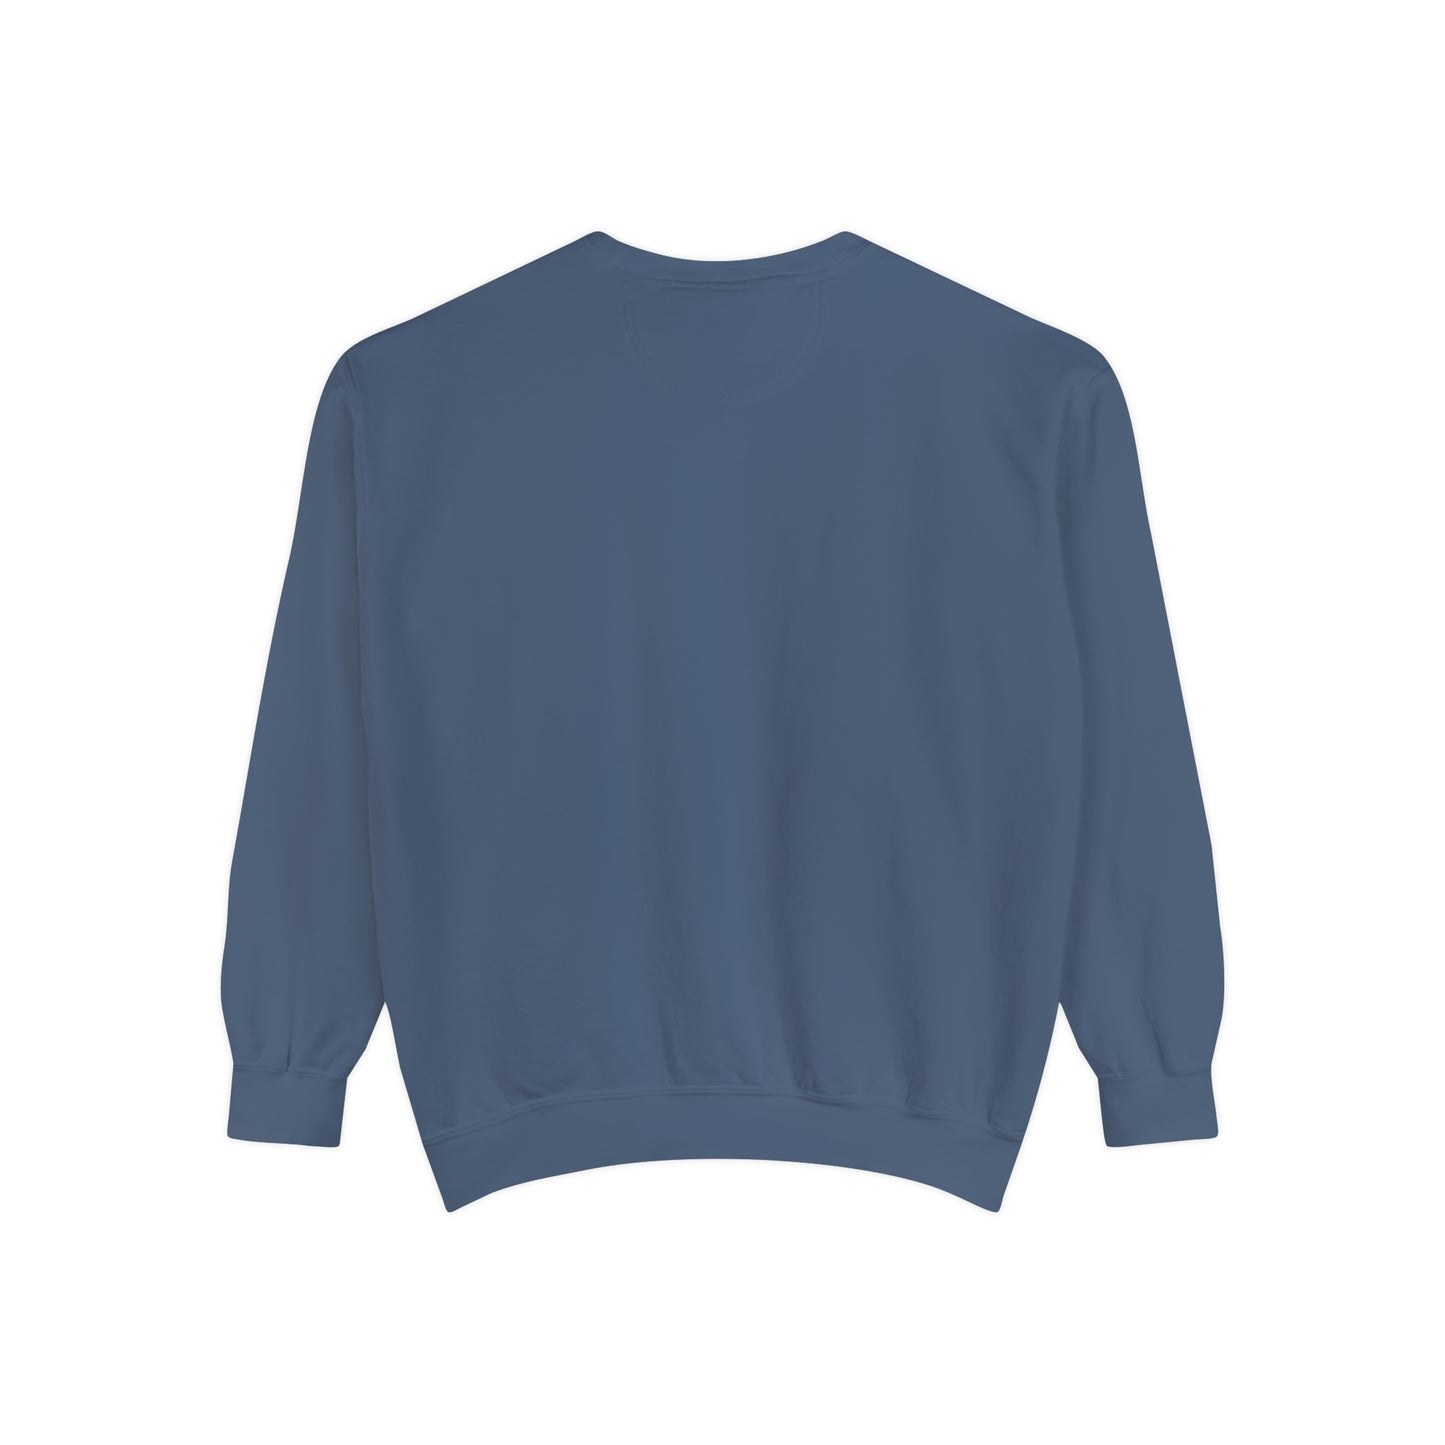 Chingón Sudadera Unisex Garment-Dyed Sweatshirt